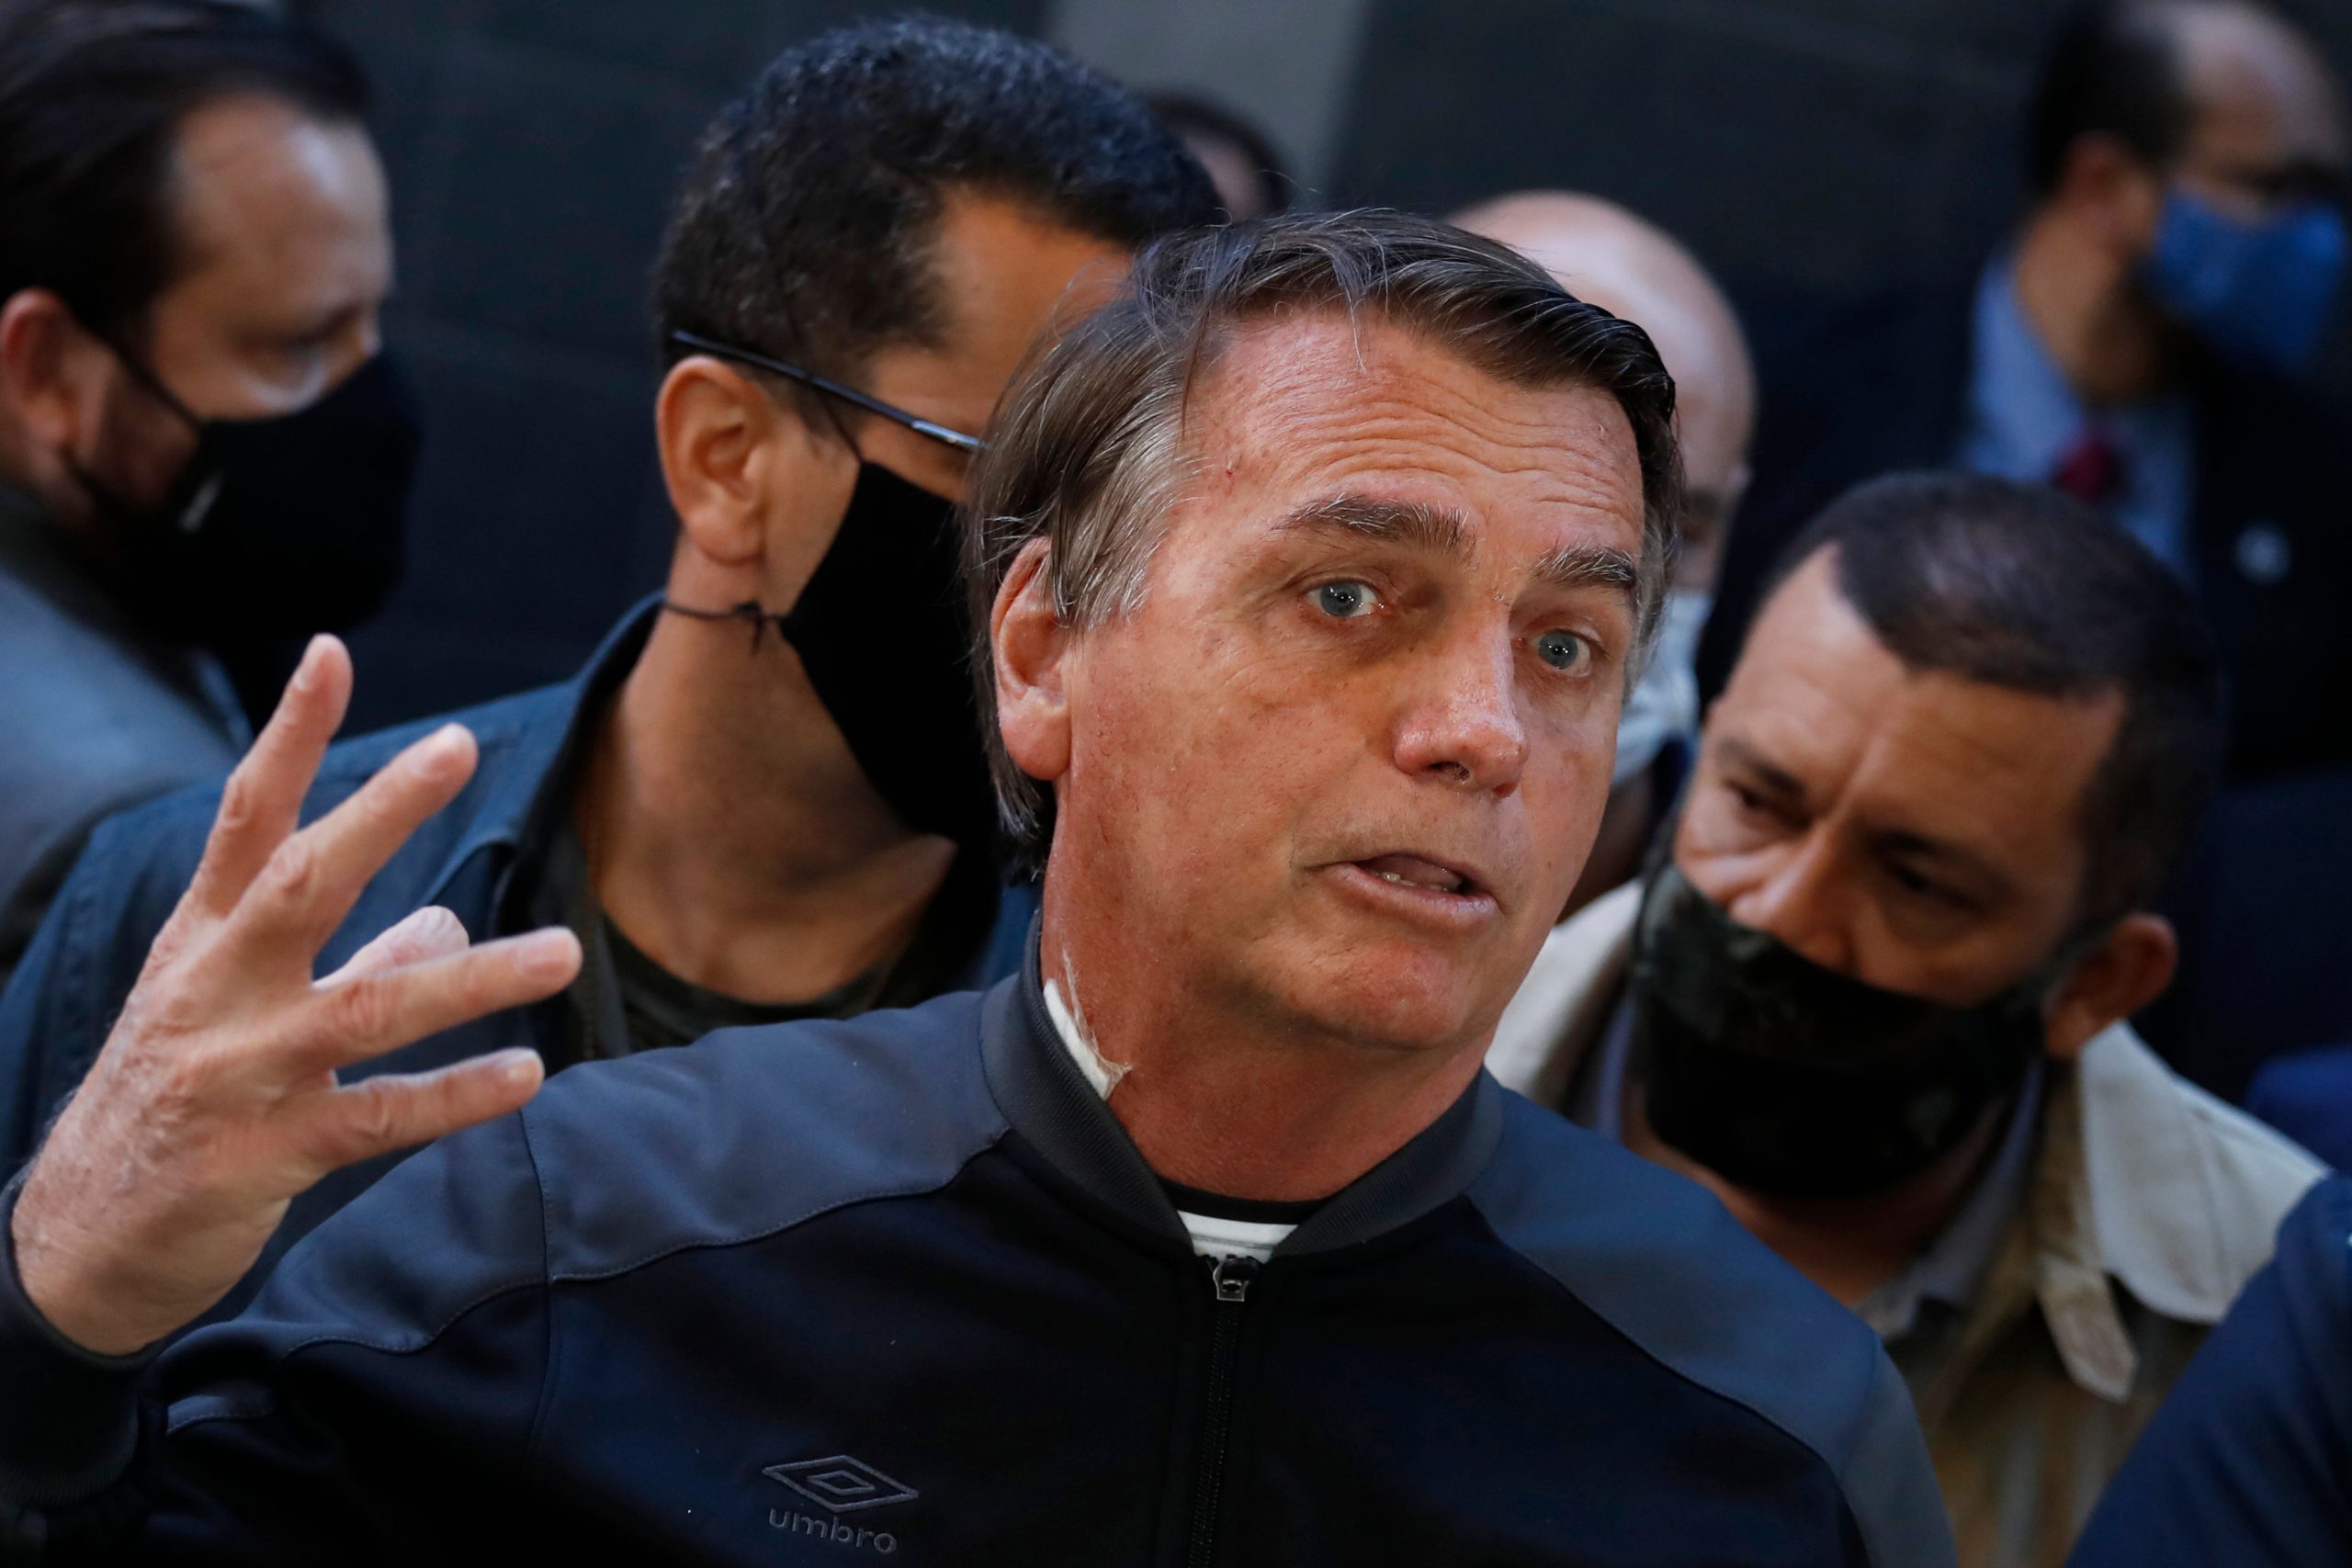 Brazil President Jair Bolsonaro says questions on COVID deaths bore him